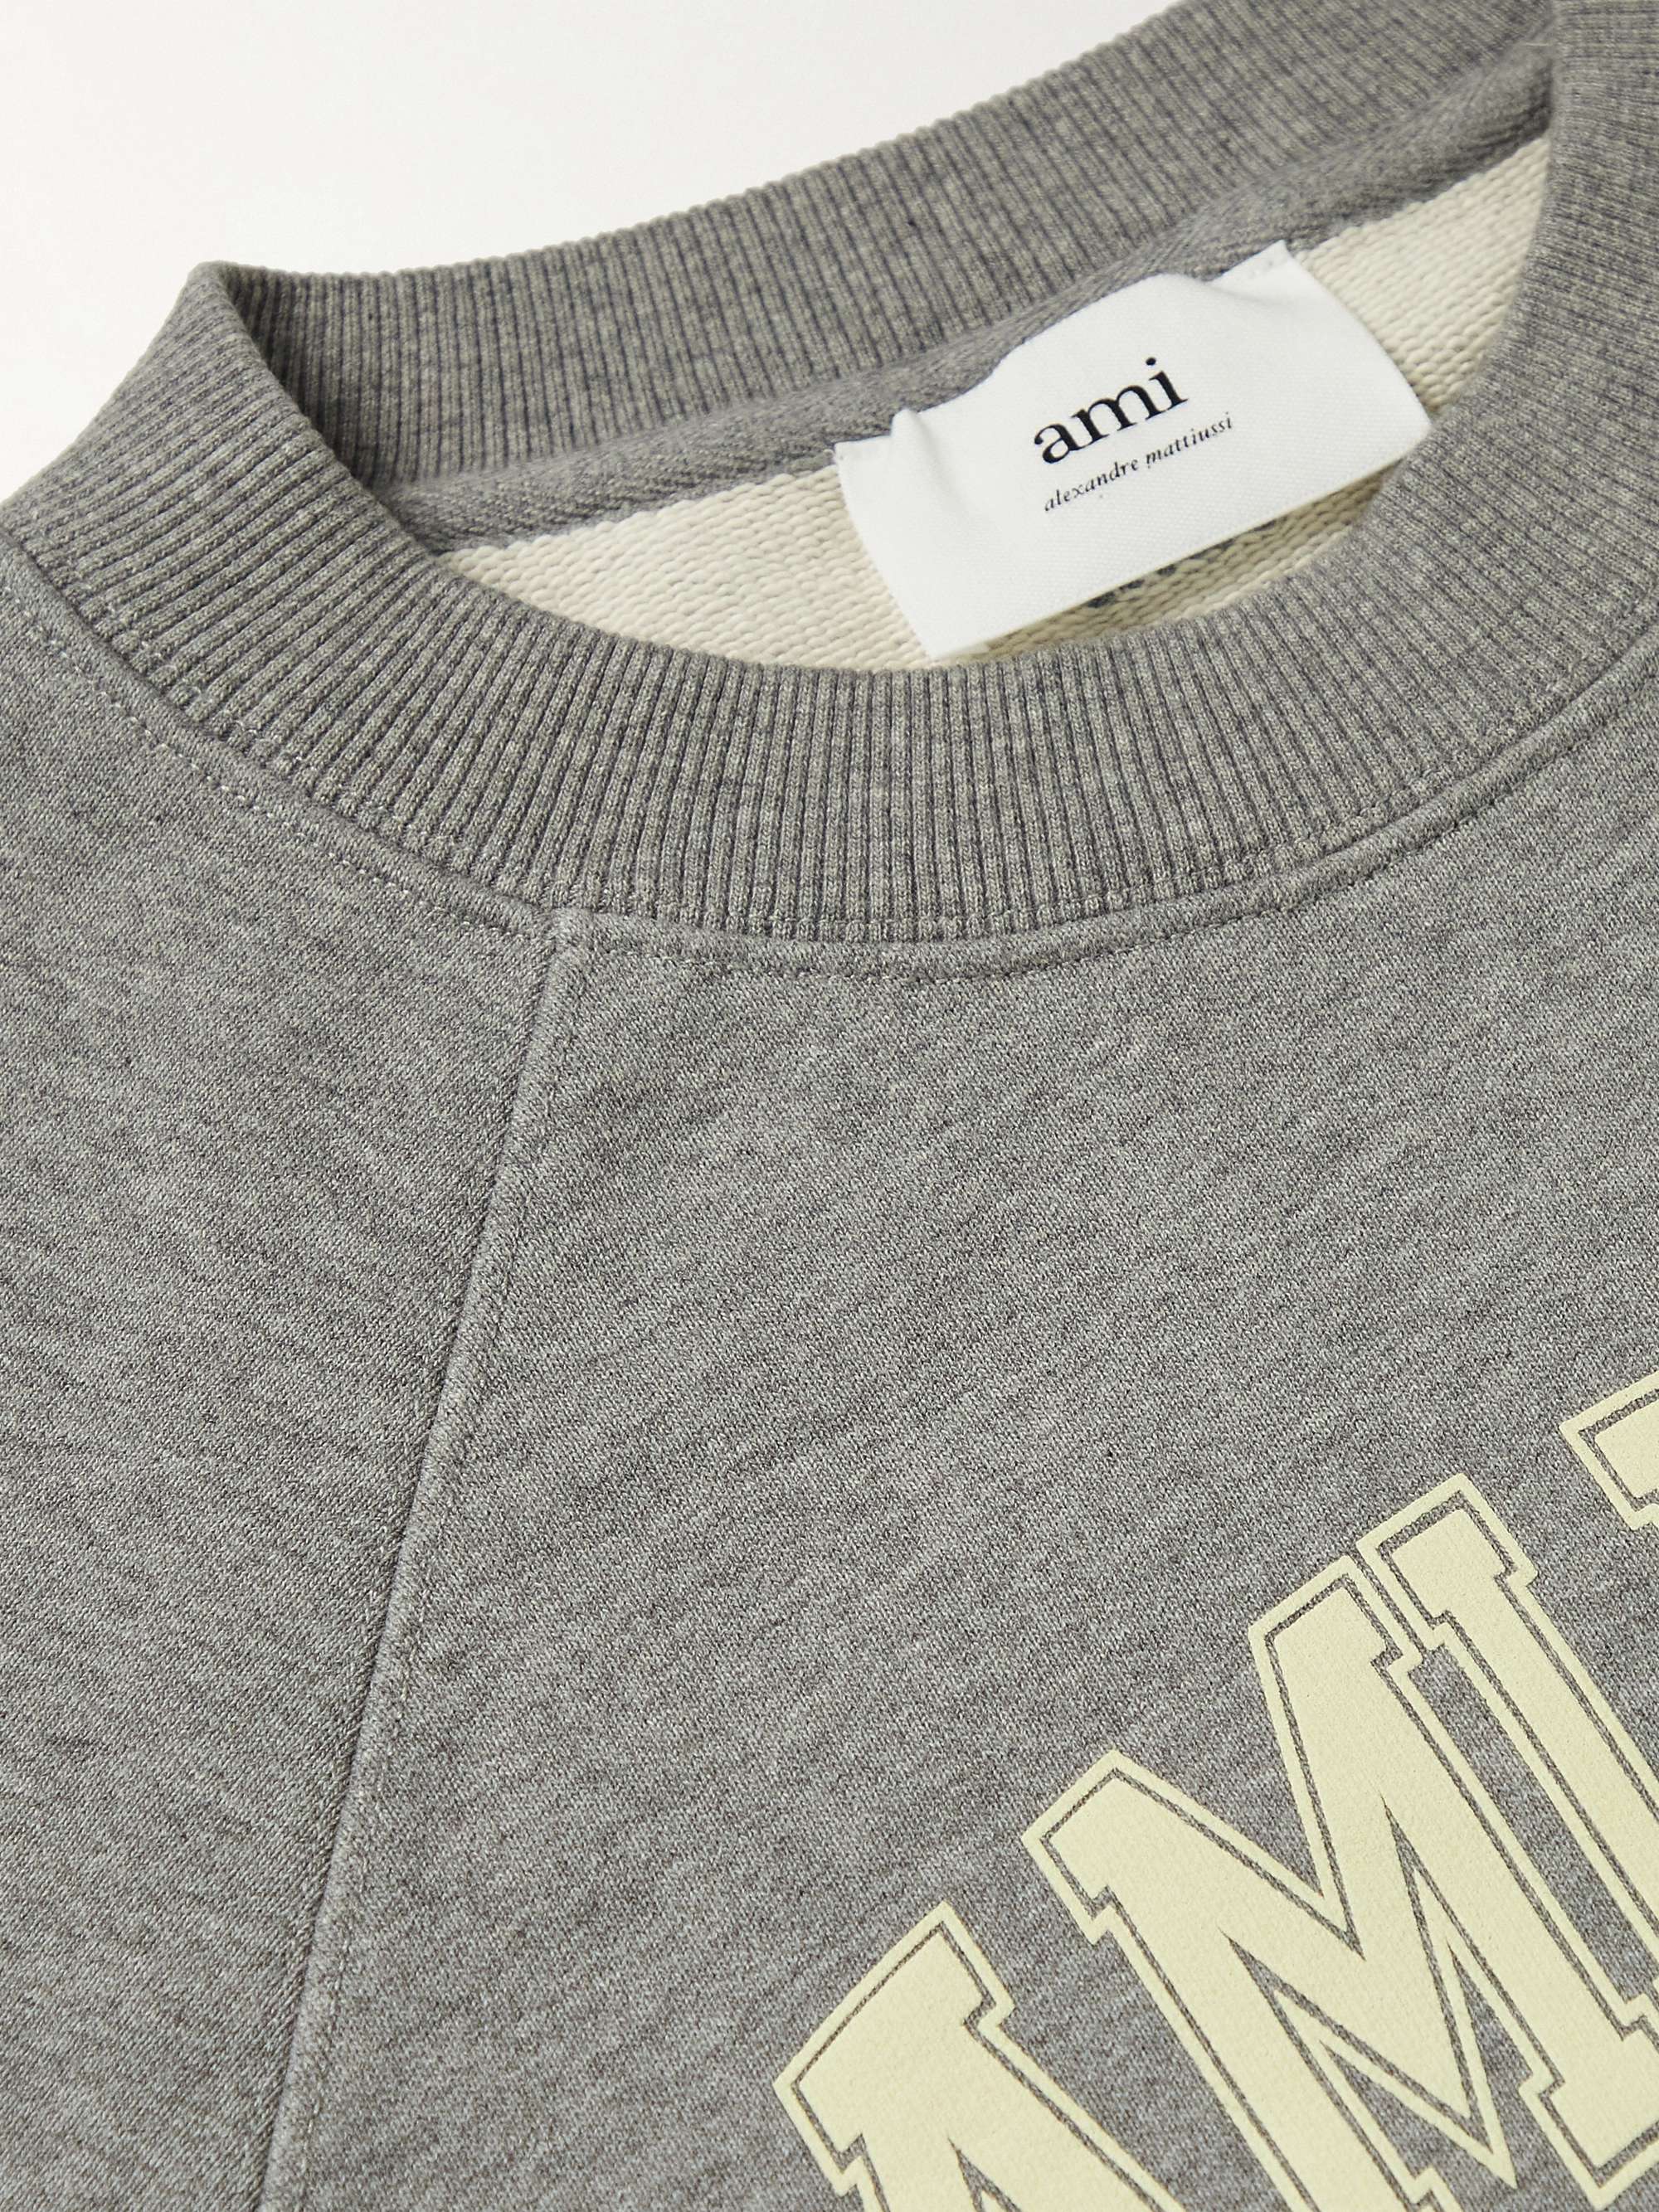 AMI PARIS Logo-Print Cotton-Jersey Sweatshirt